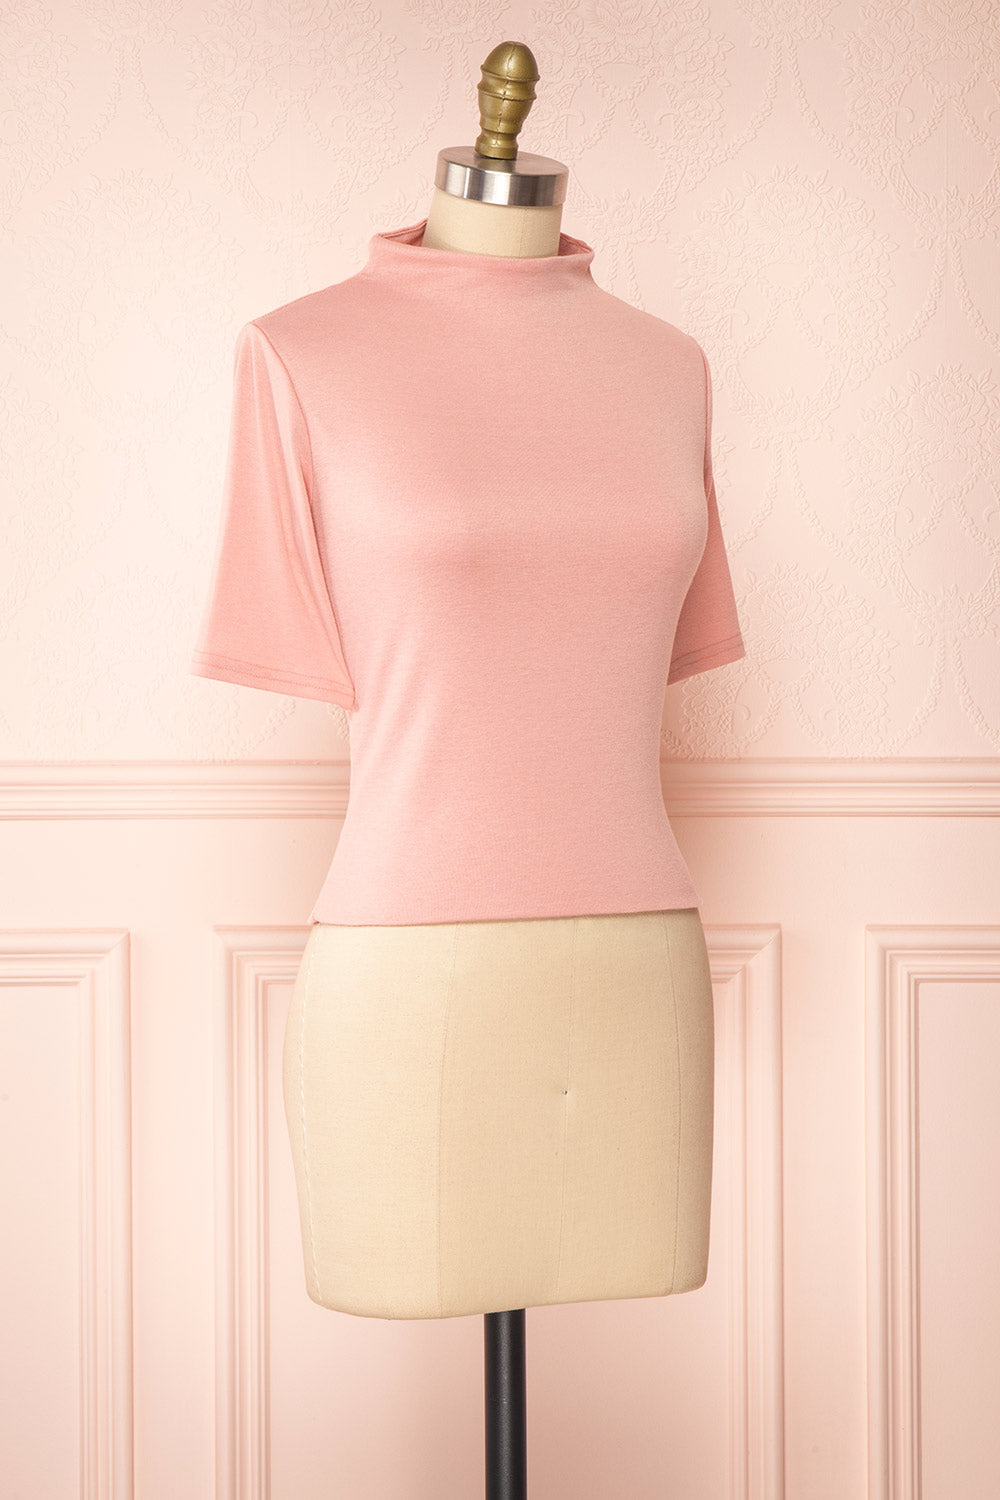 Agnees Pink Mock Neck Crop T-Shirt | Boutique 1861 side view 